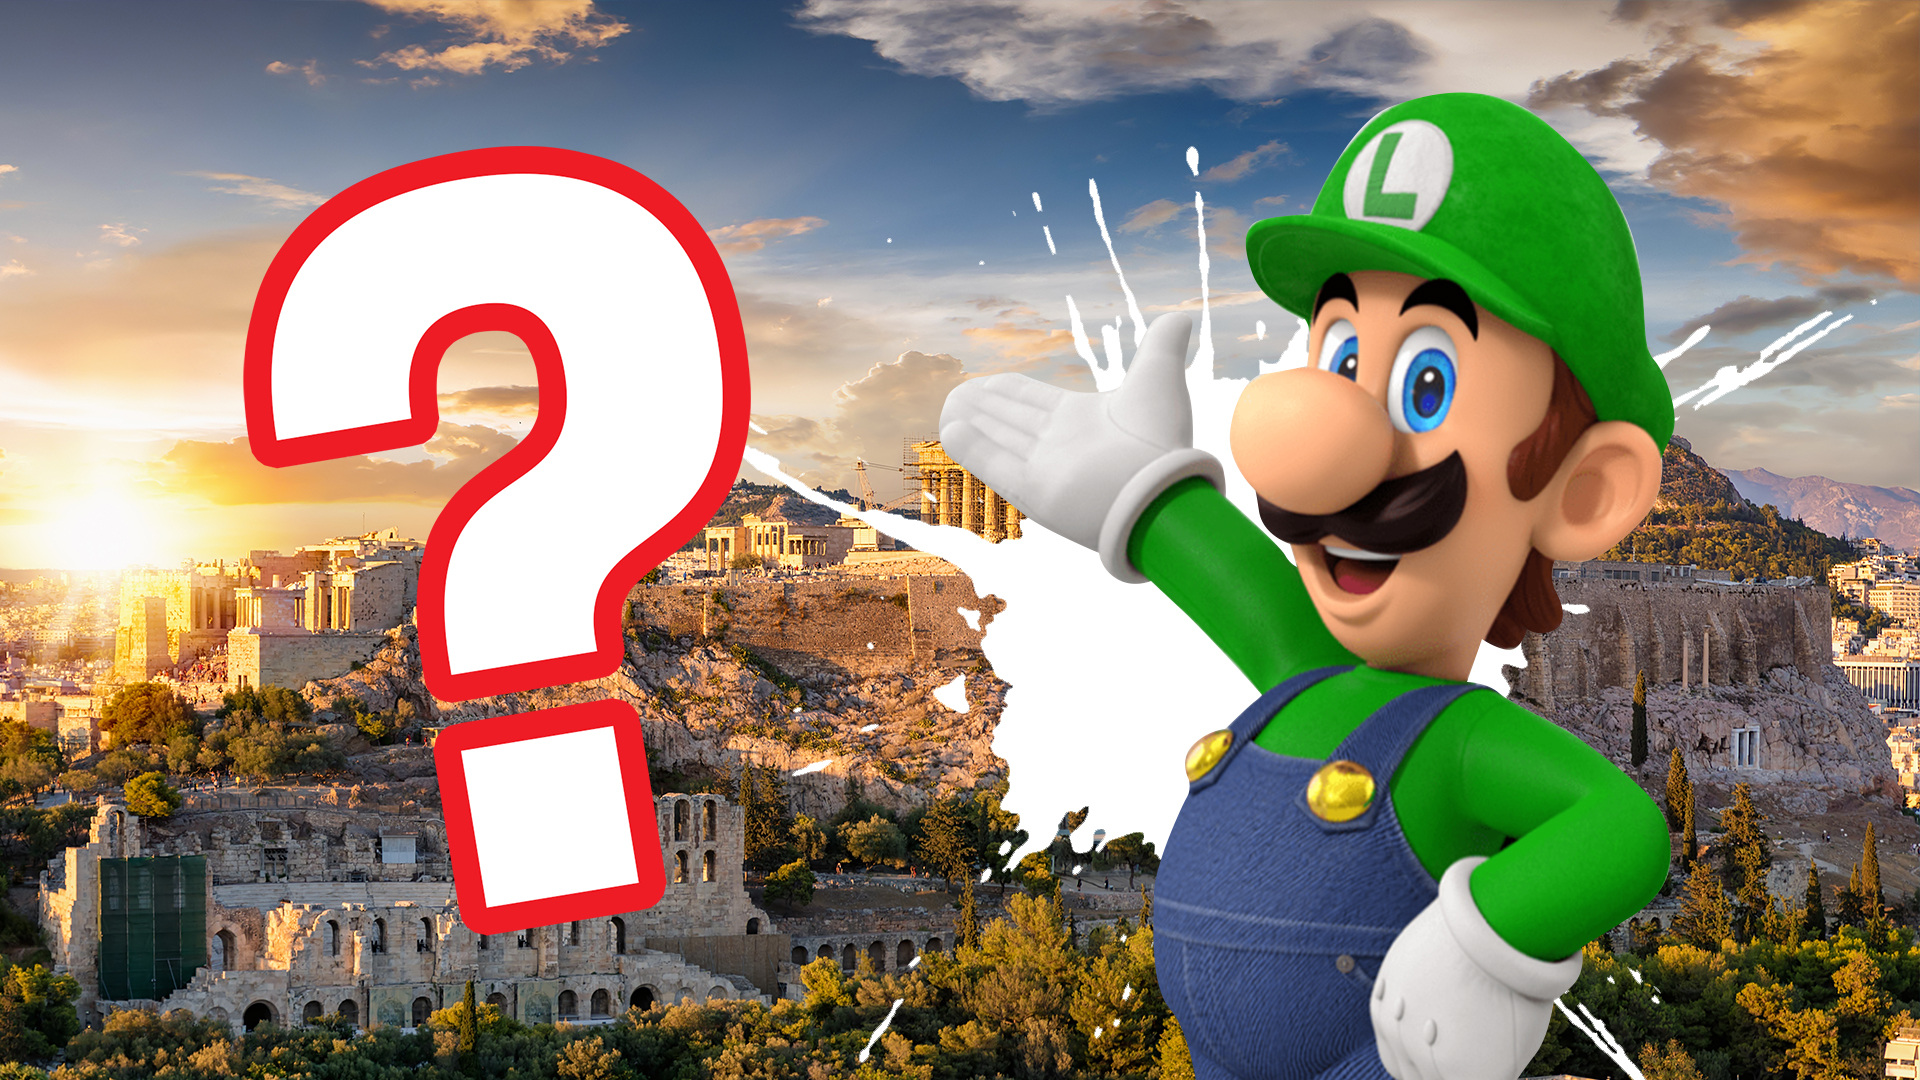 The Luigi character points toward Athens